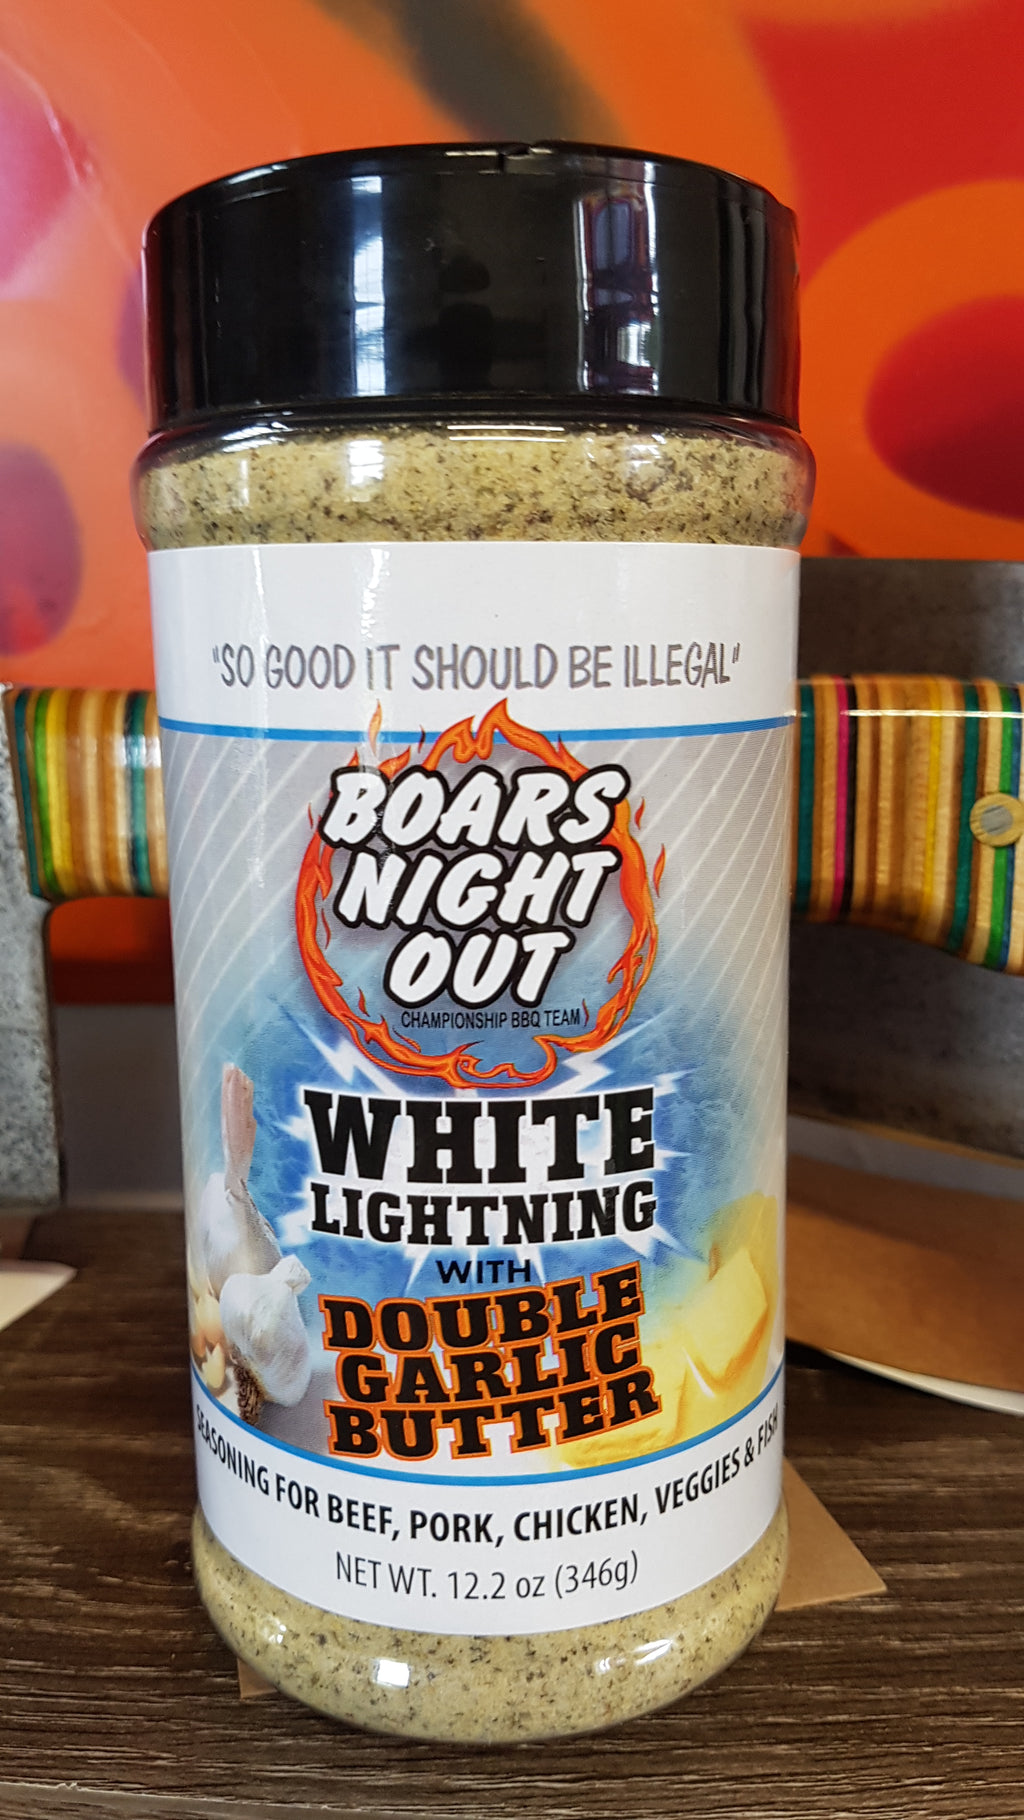 Boars Night Out White Lightning Seasoning Rub, 14.5 oz. Bottle at